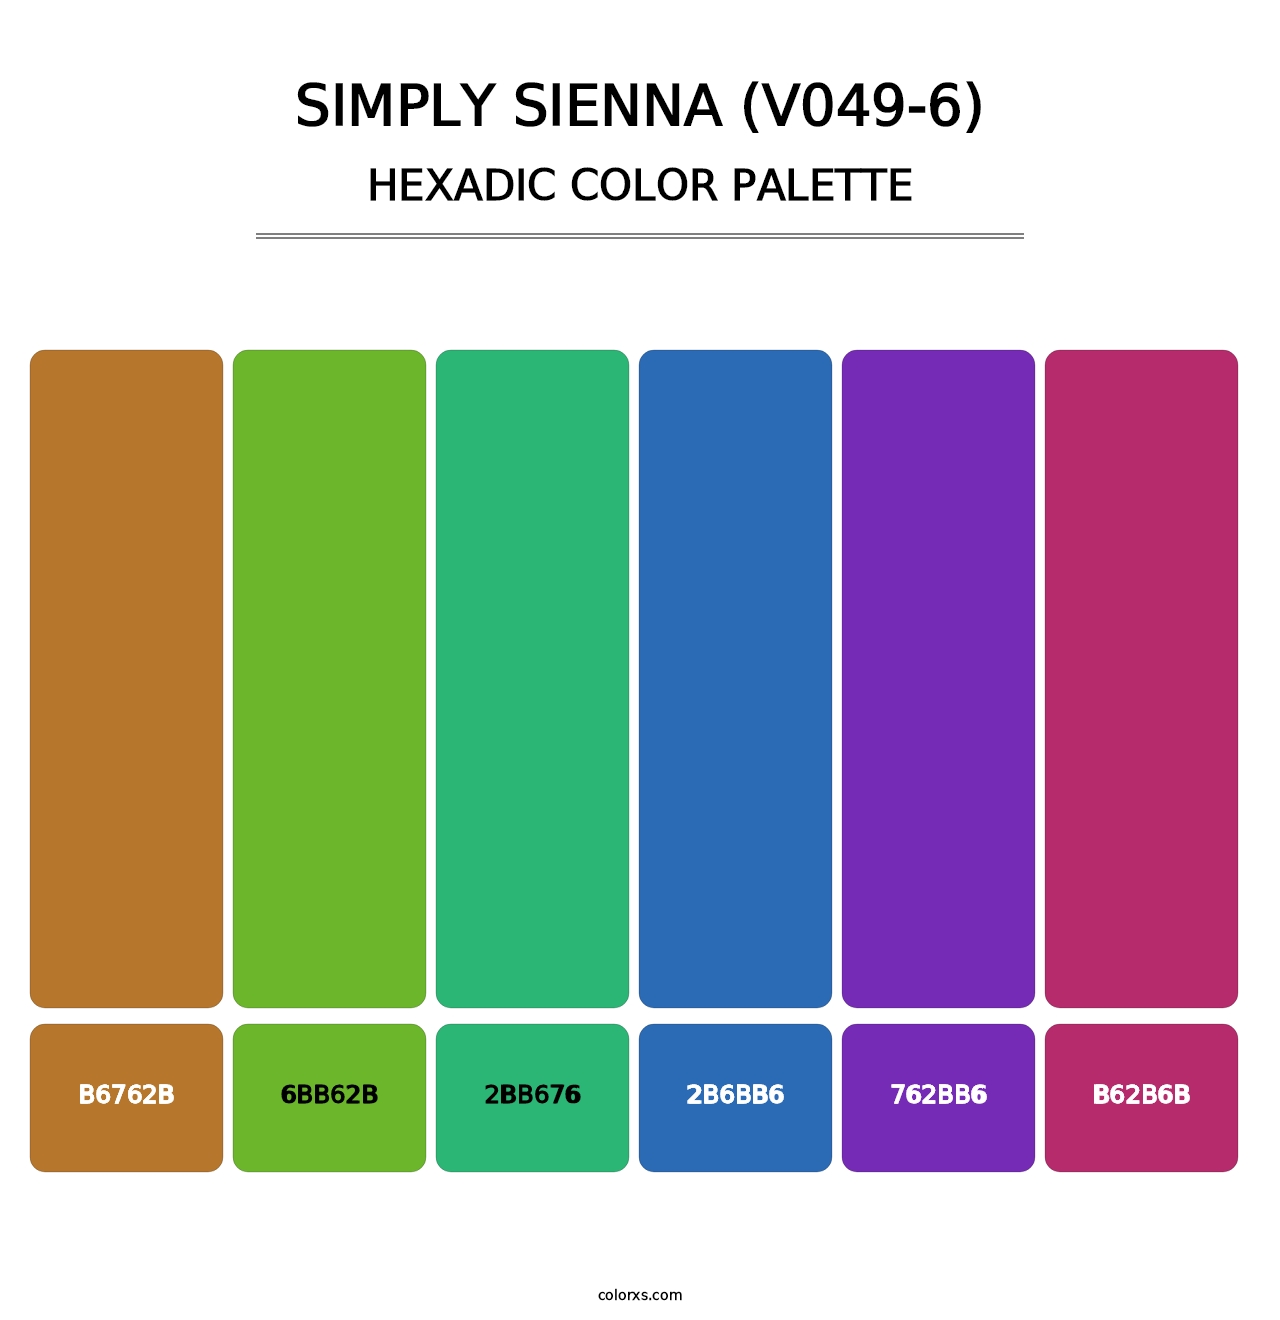 Simply Sienna (V049-6) - Hexadic Color Palette